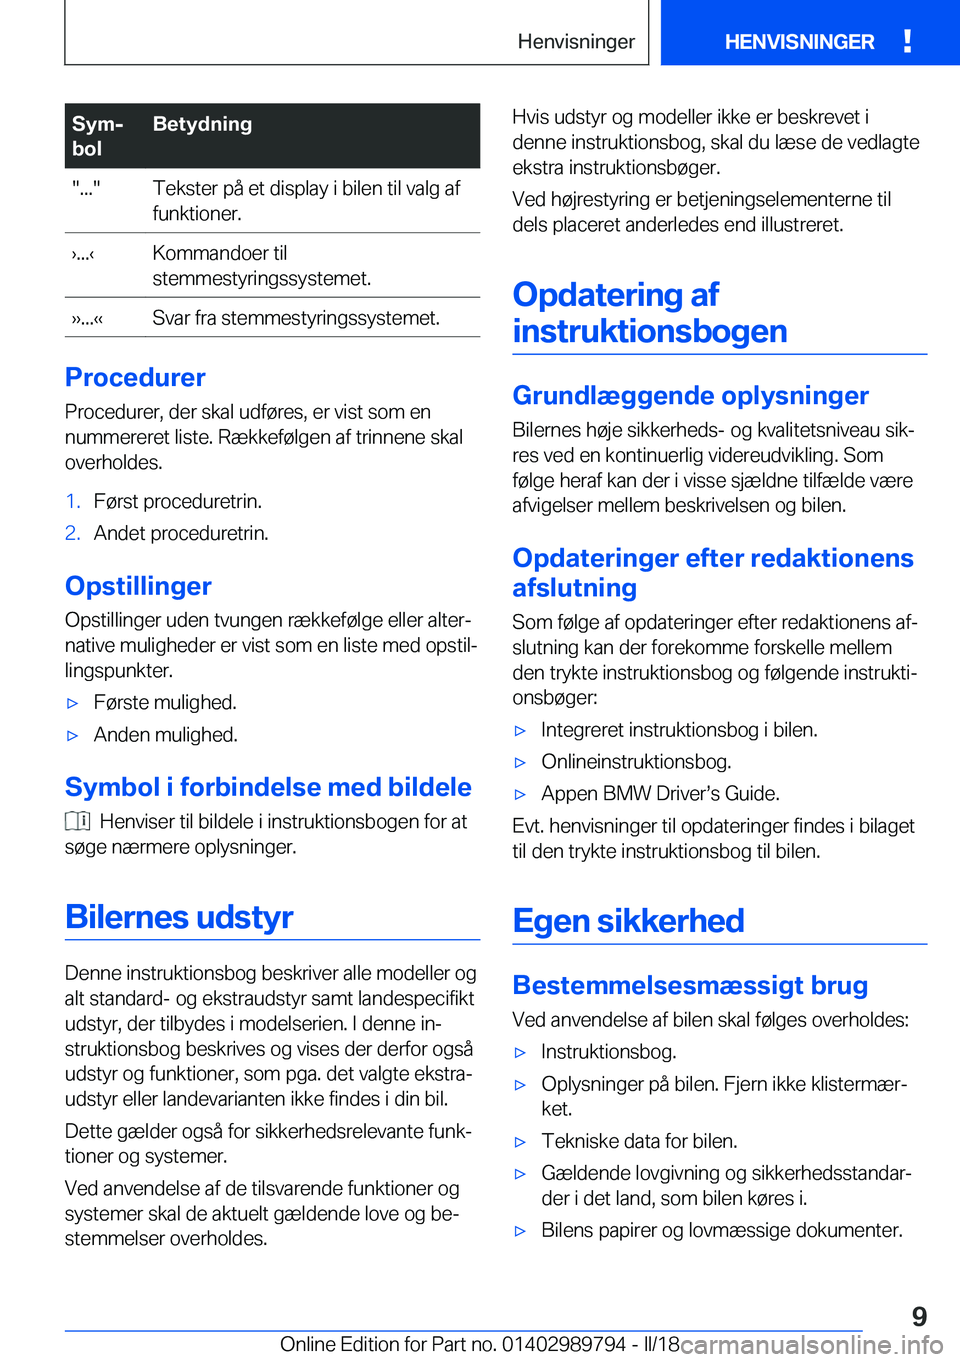 BMW M5 2018  InstruktionsbØger (in Danish) �S�y�mj
�b�o�l�B�e�t�y�d�n�i�n�g�"�.�.�.�"�T�e�k�s�t�e�r� �p�å� �e�t� �d�i�s�p�l�a�y� �i� �b�i�l�e�n� �t�i�l� �v�a�l�g� �a�f
�f�u�n�k�t�i�o�n�e�r�.